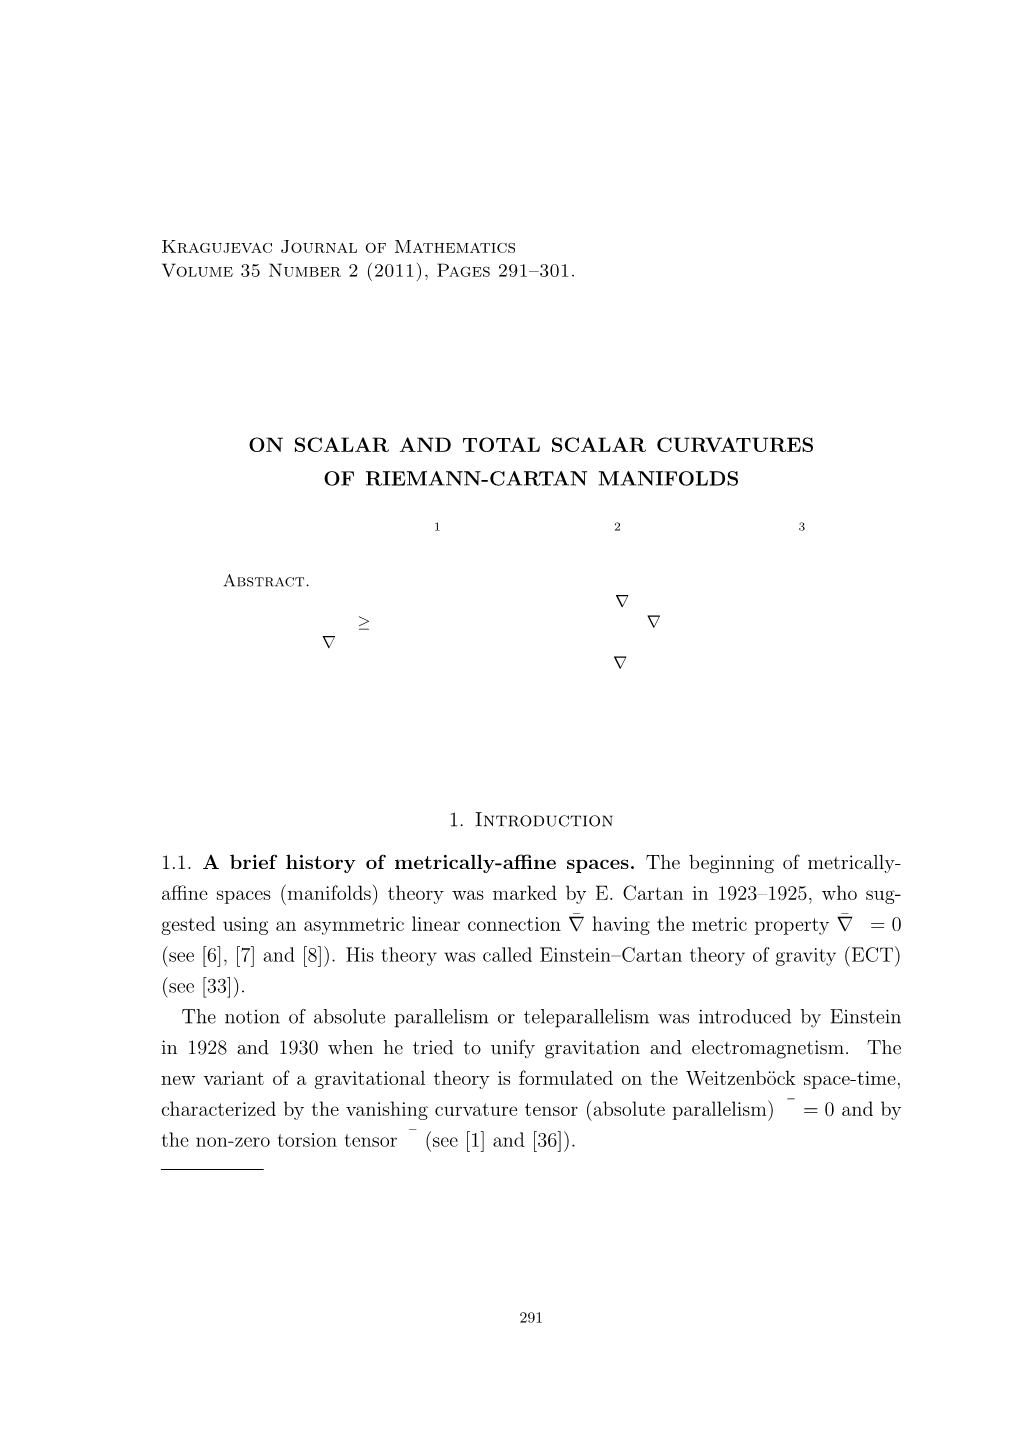 On Scalar and Total Scalar Curvatures of Riemann-Cartan Manifolds